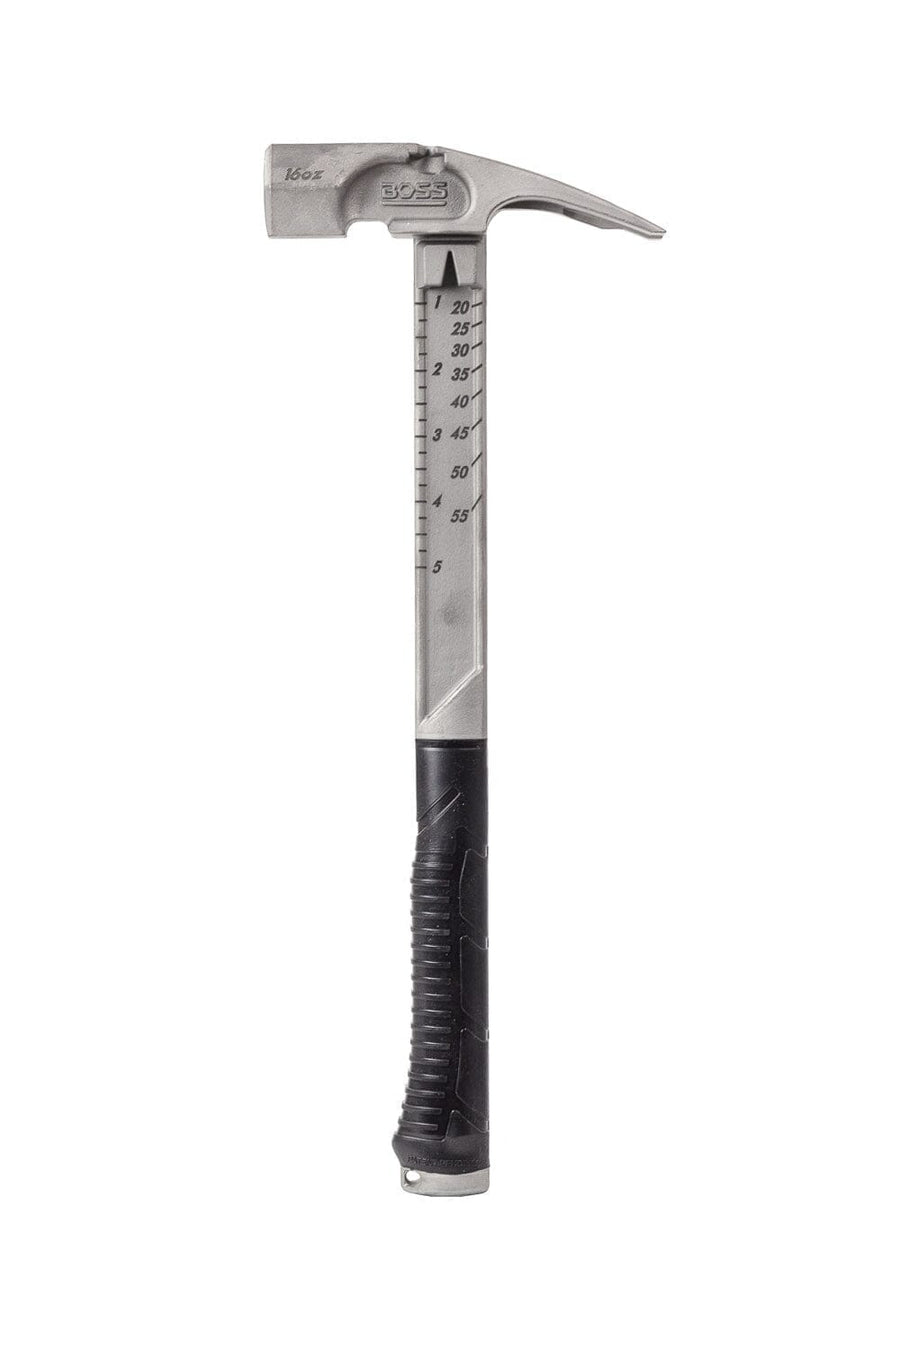 NEW Pro Plus Series Titanium Hammer Titanium Boss Hammer Co. 16 oz Smooth Face 